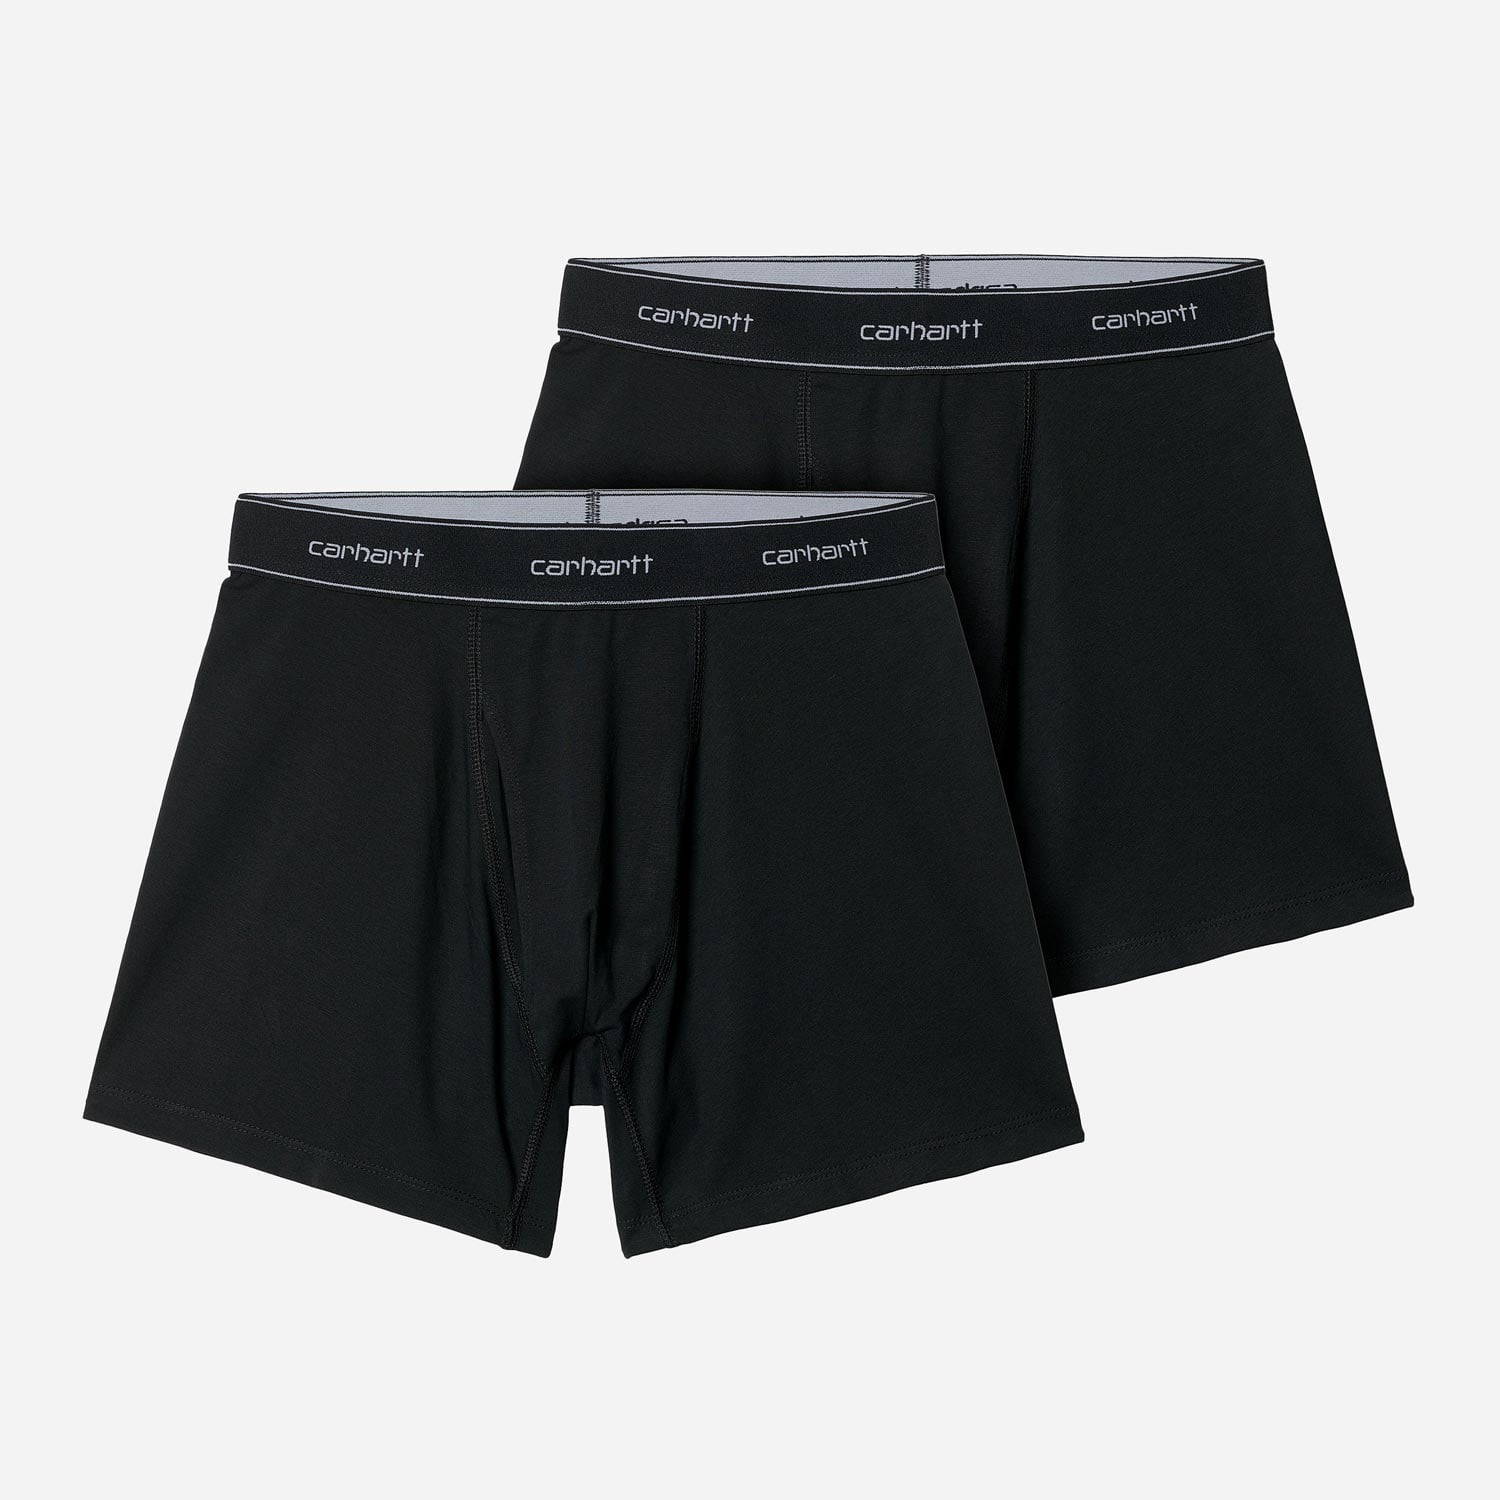 Carhartt WIP 2 Pack Cotton Trunk Boxer Short - Black/Black